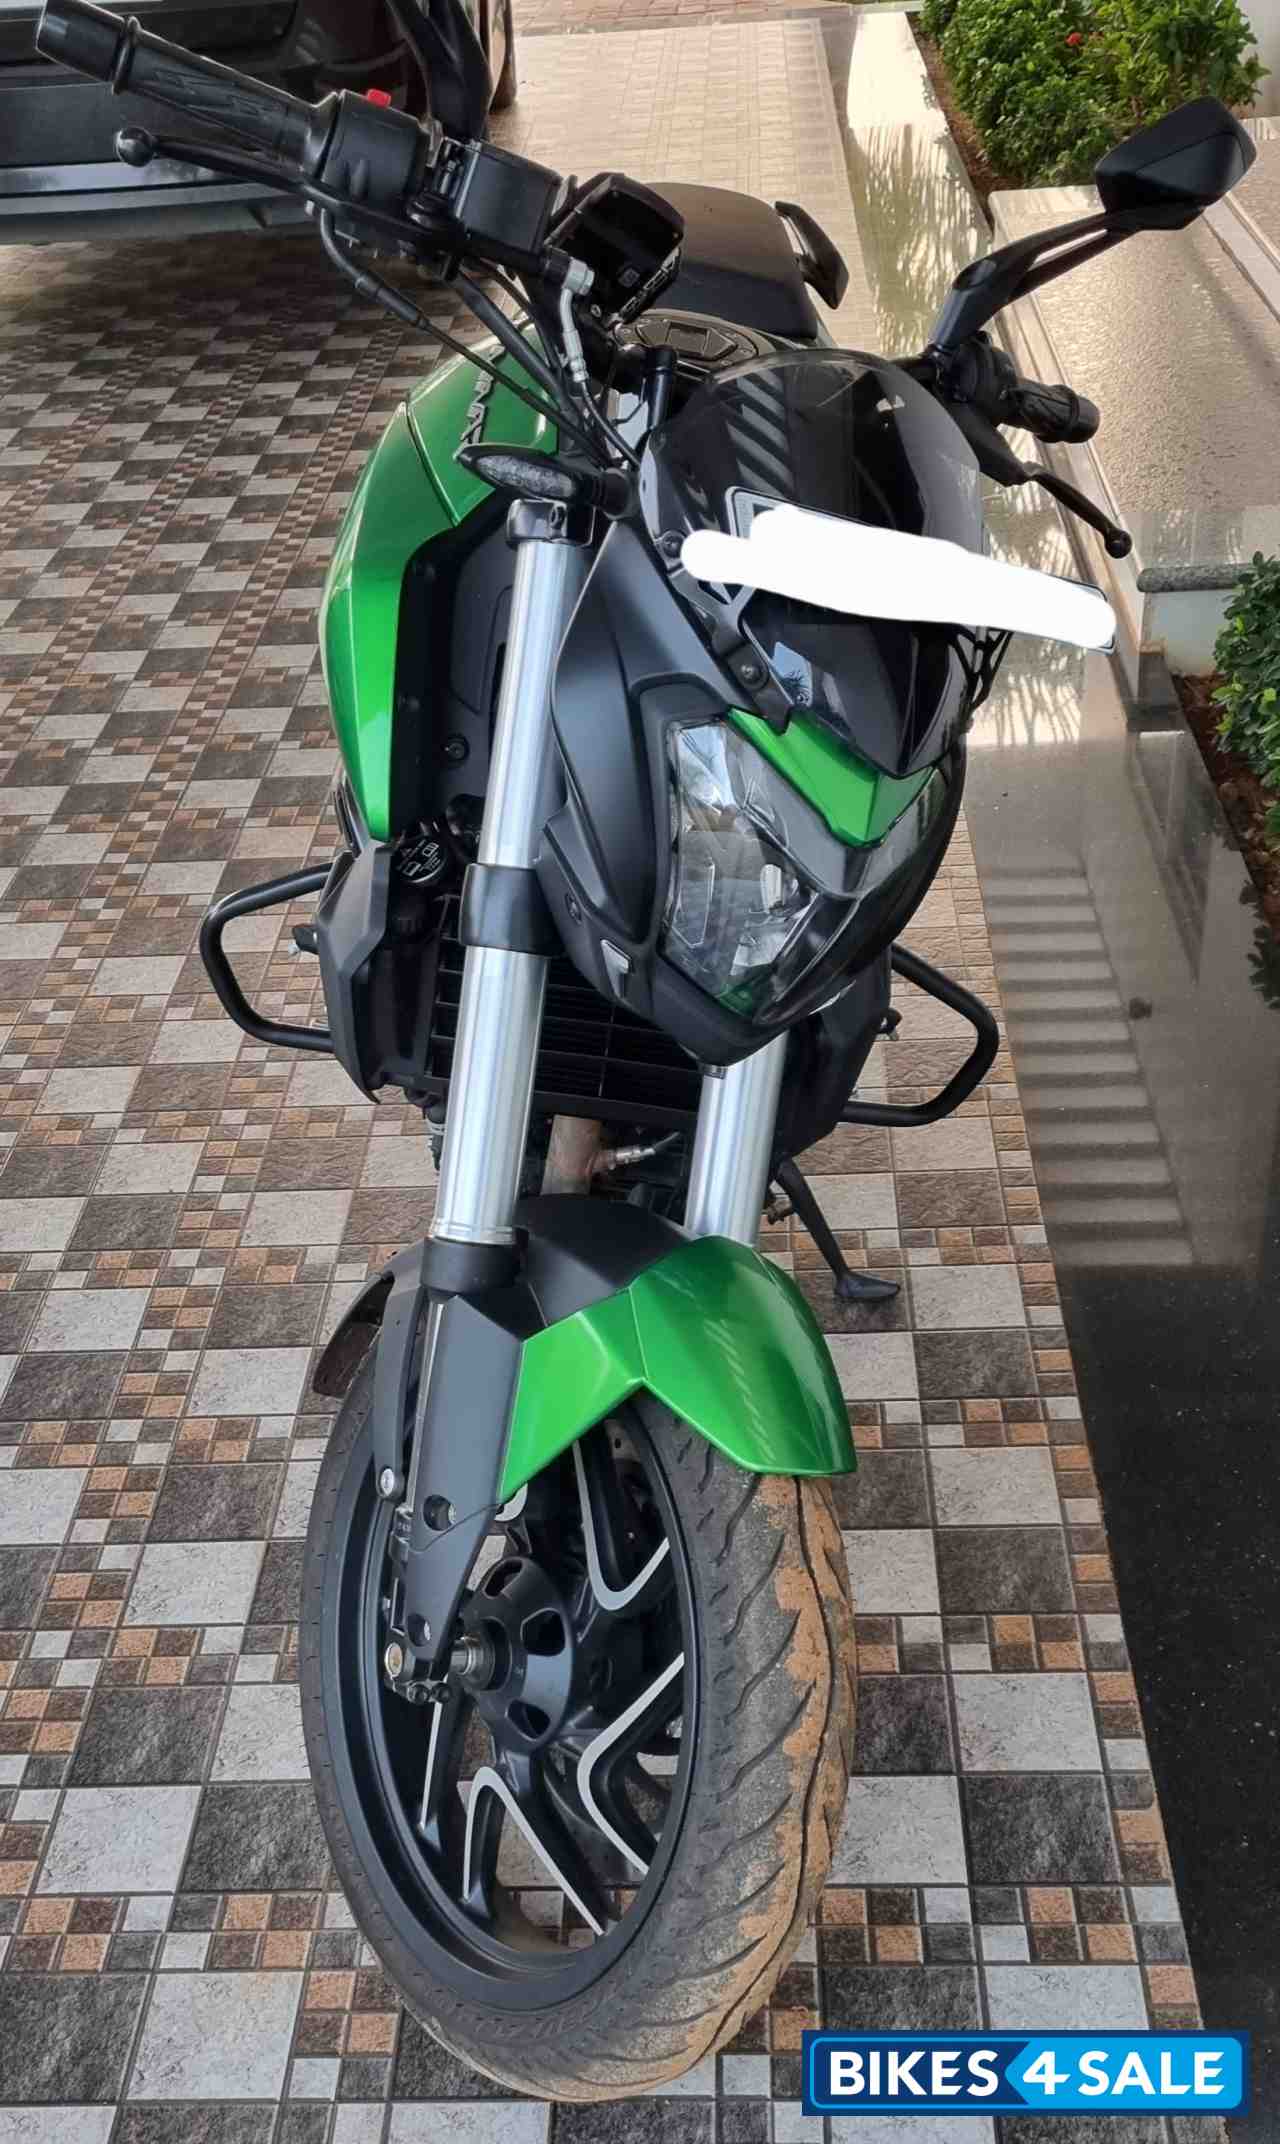 Green Bajaj Dominar 400 ABS BS6